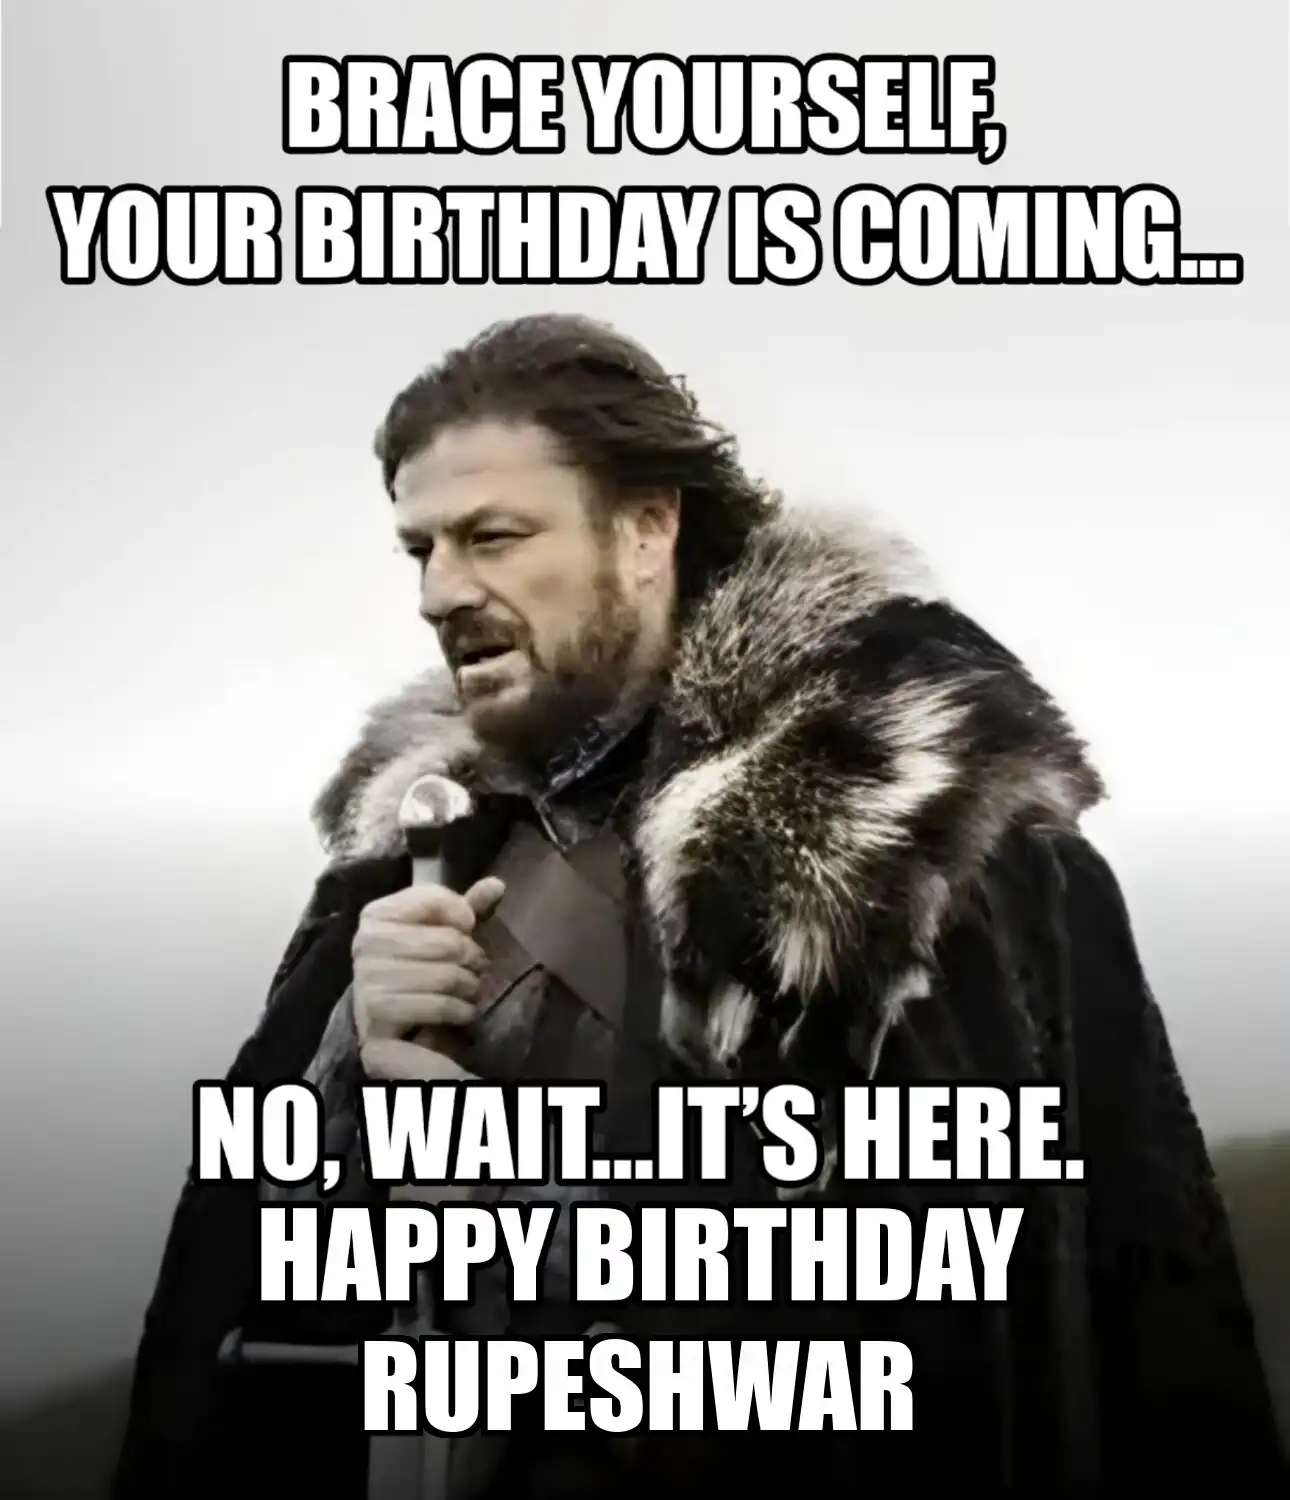 Happy Birthday Rupeshwar Brace Yourself Your Birthday Is Coming Meme